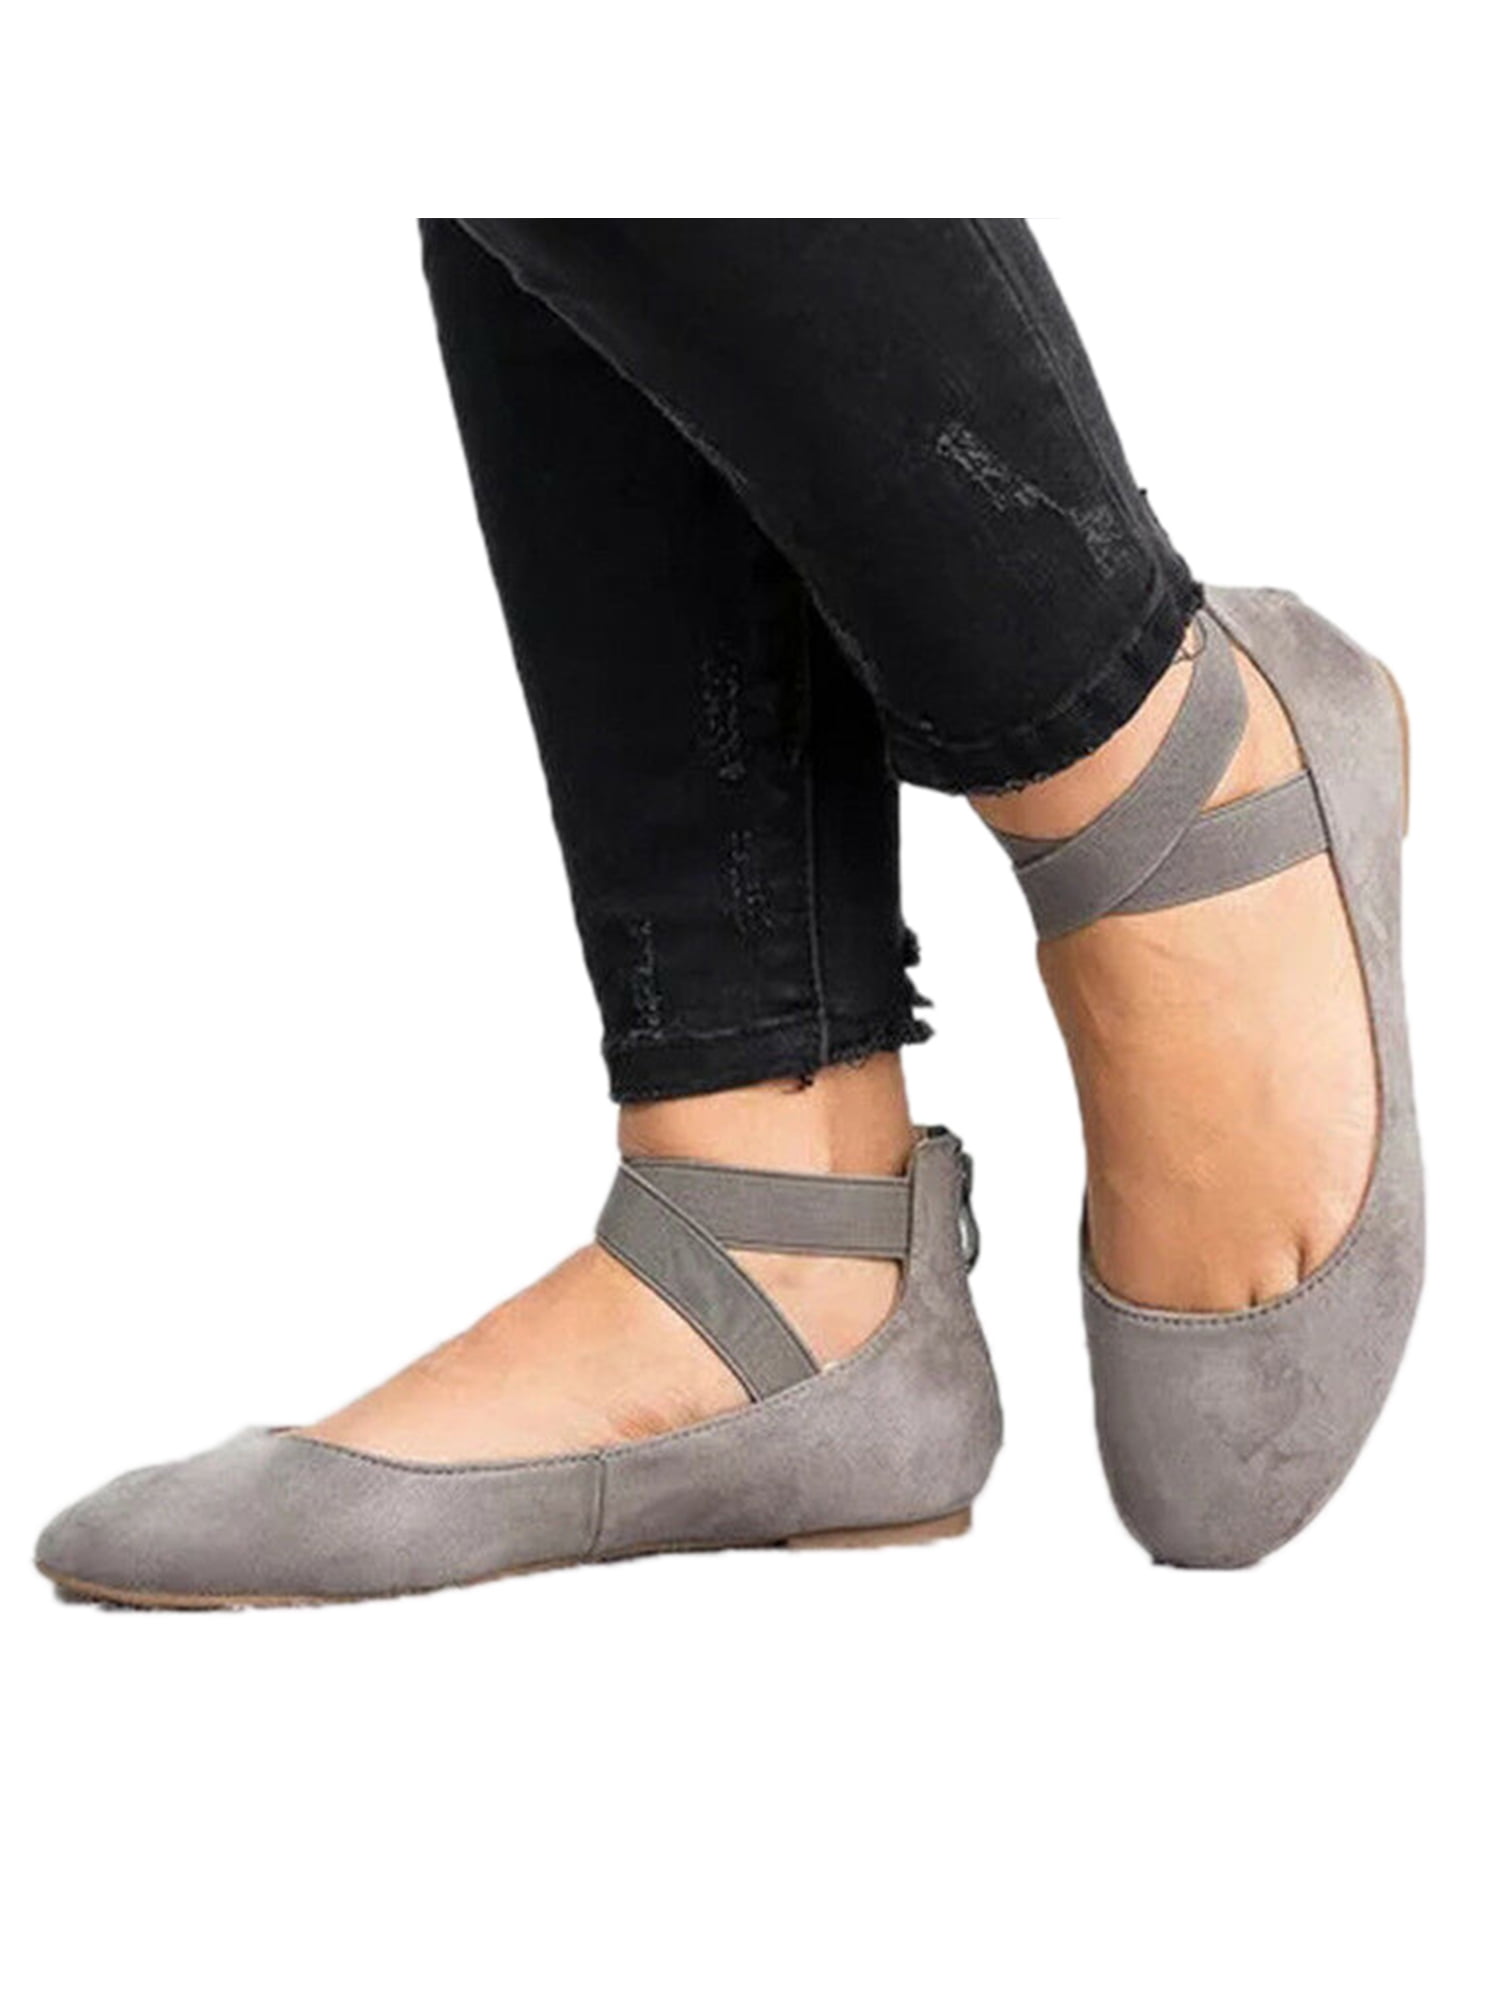 gray flats womens shoes